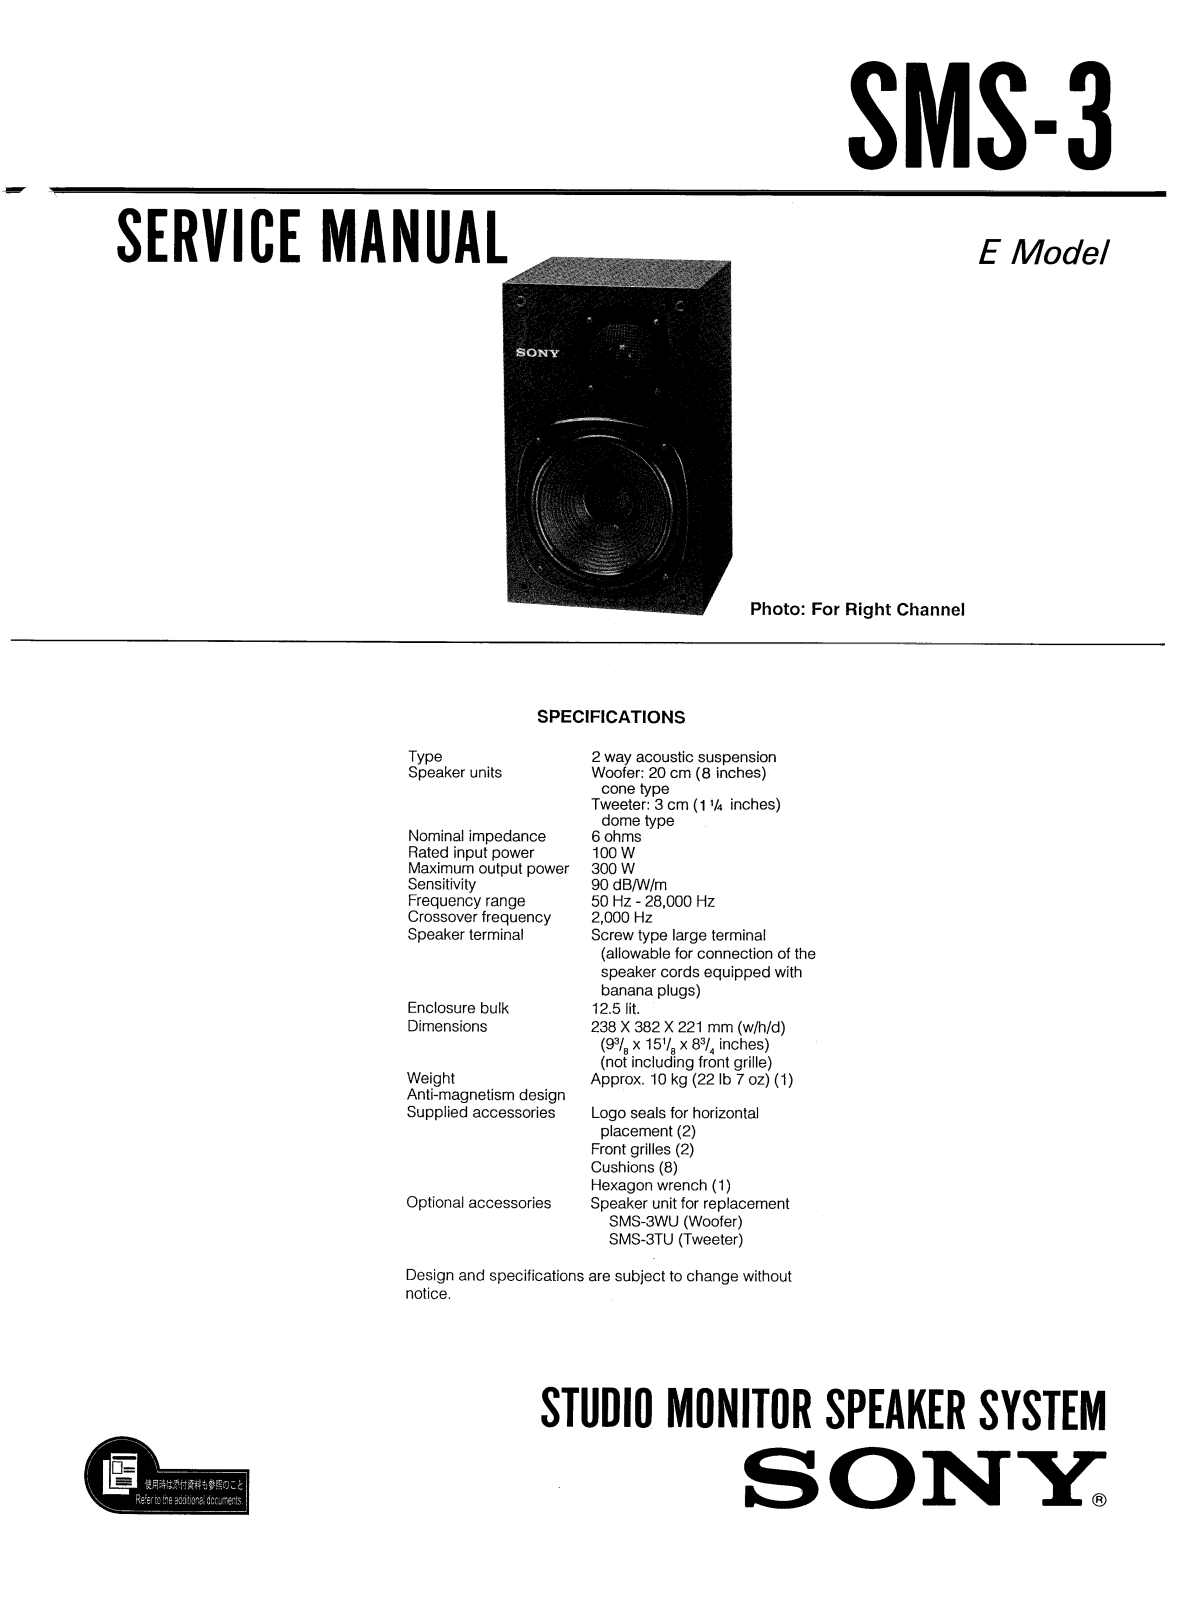 Sony SMS-3 Service manual